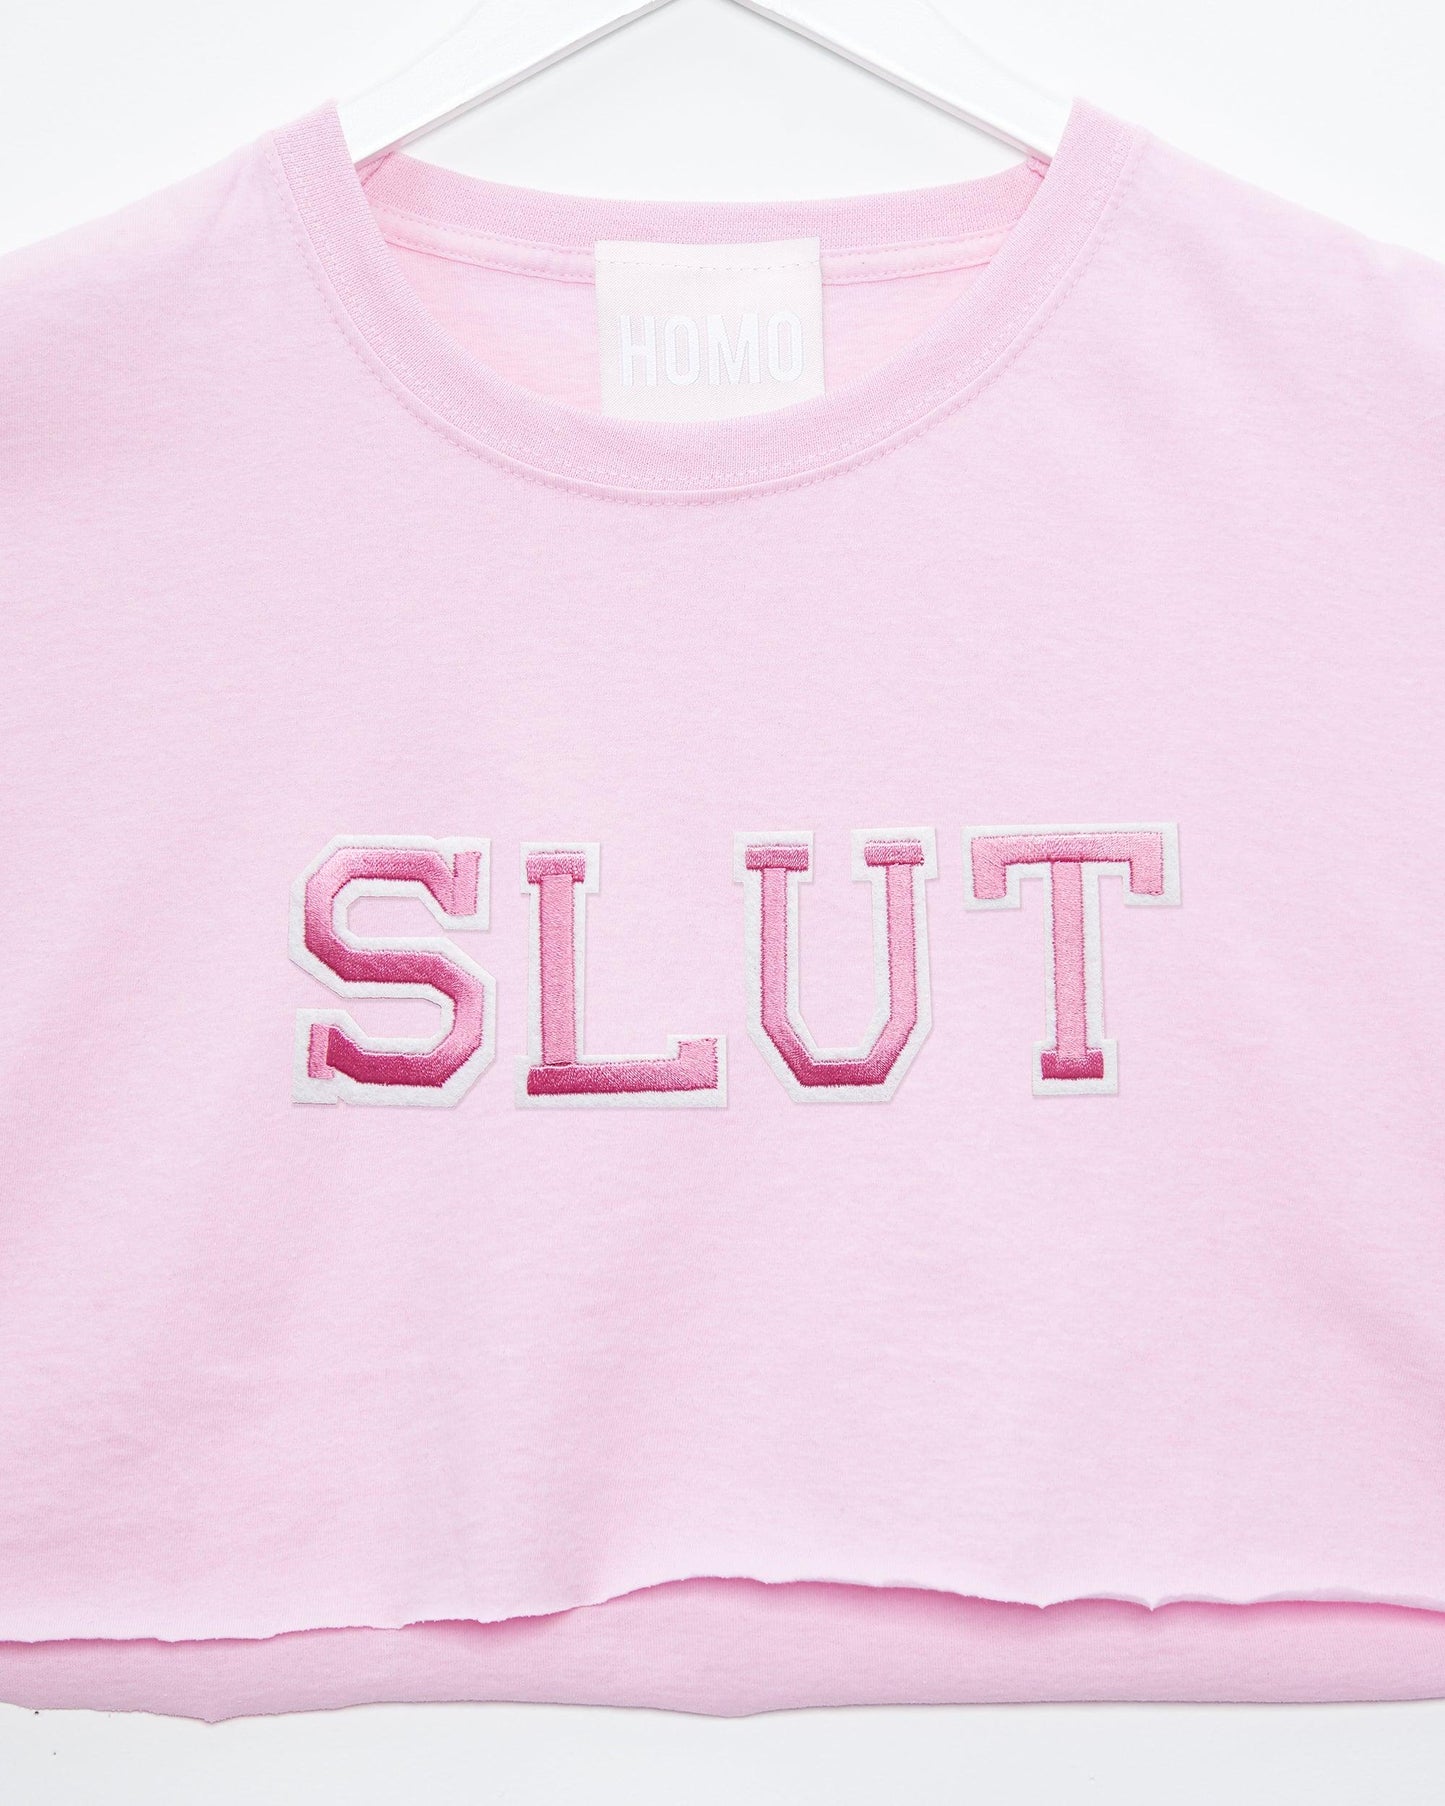 Varsity style slut embroidery on pink - mens crop top.